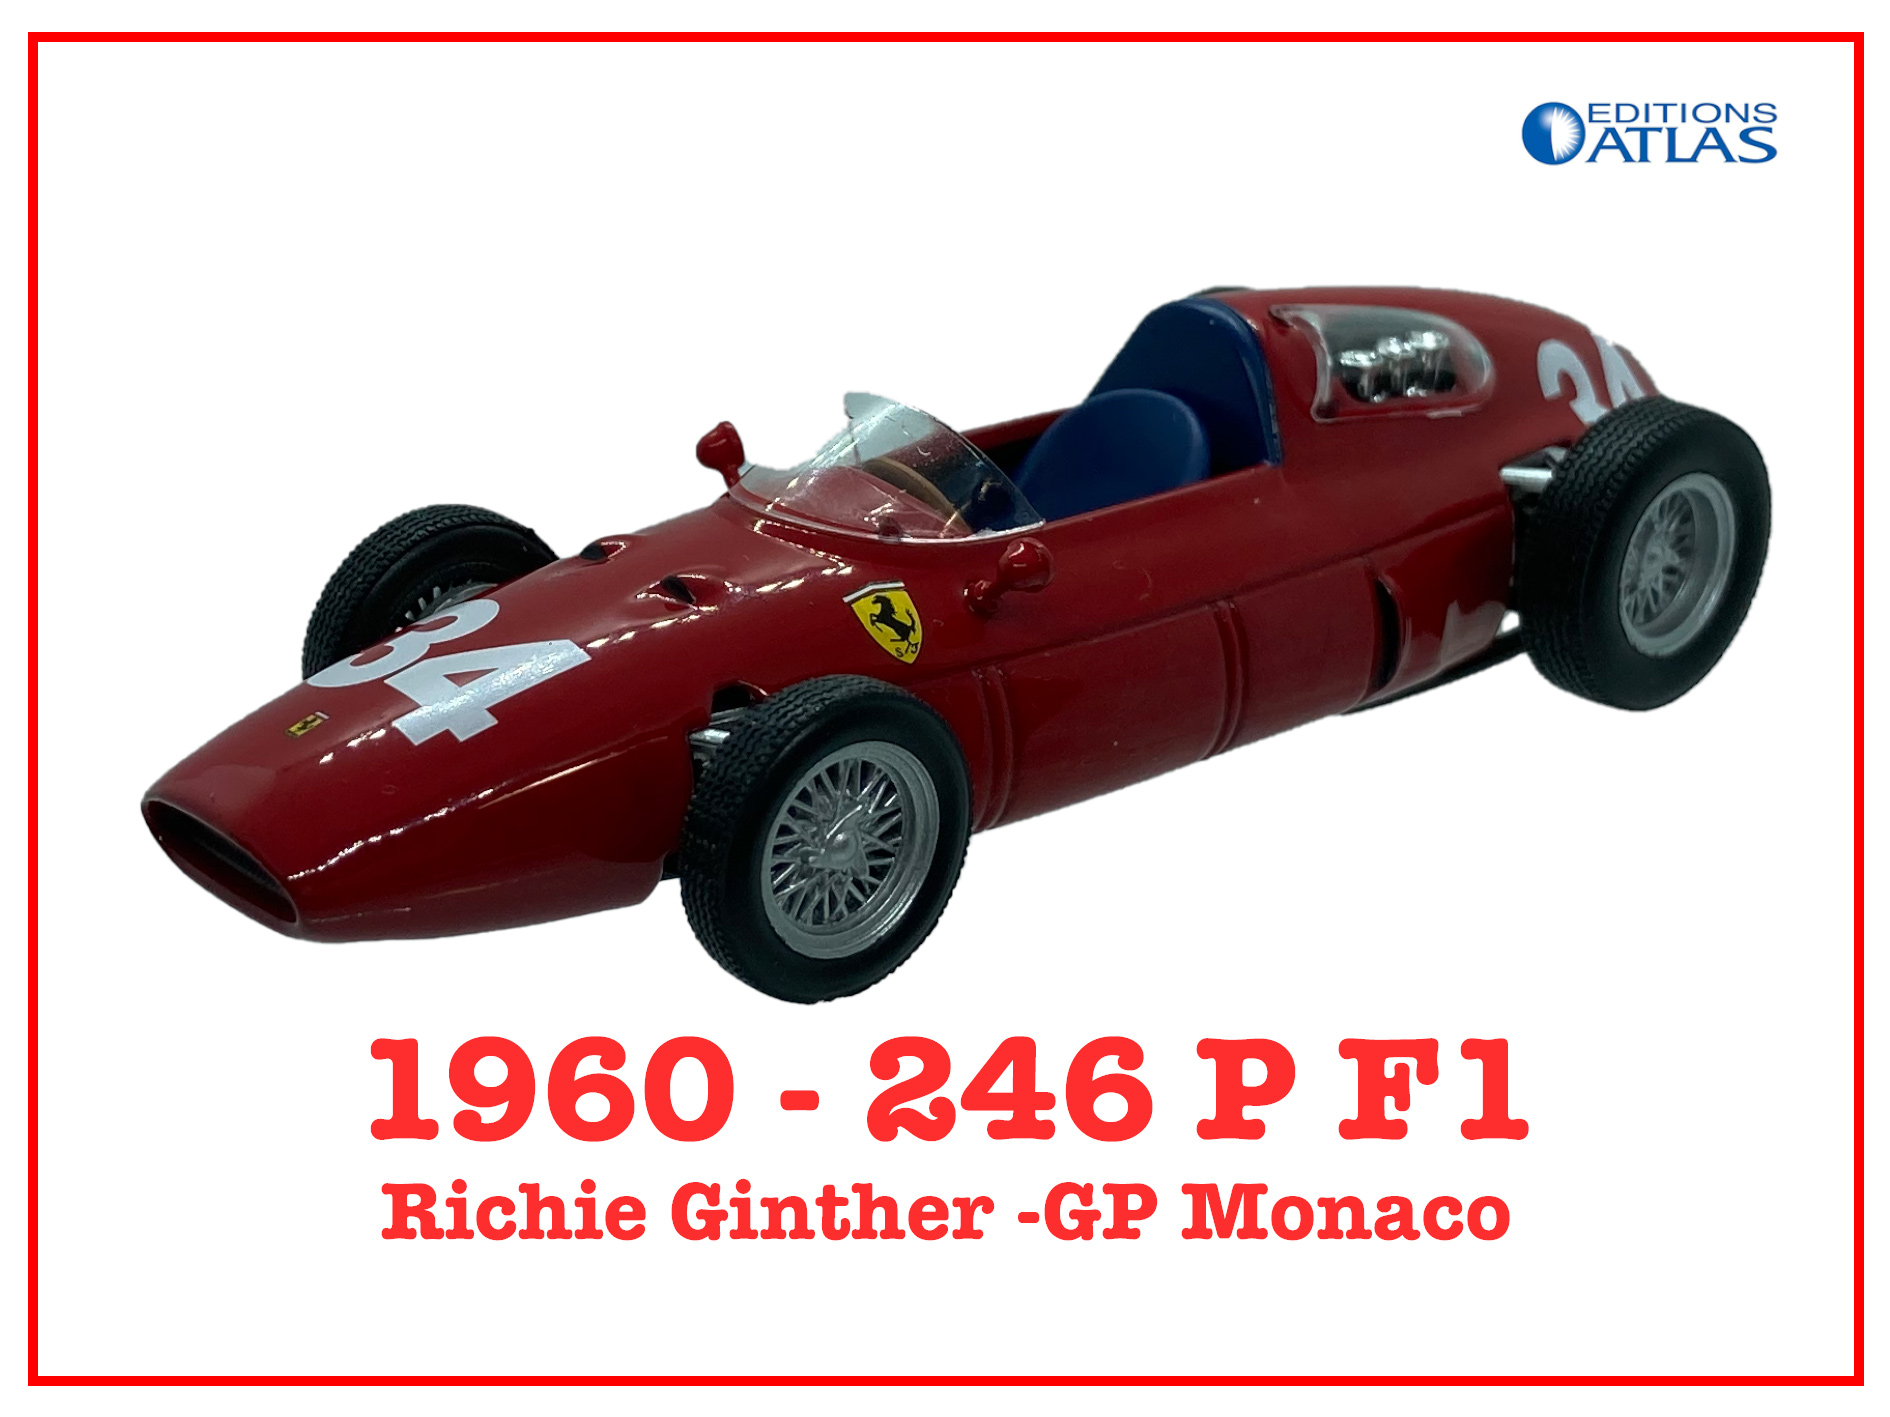 Immagine 246 P F1 Richie Ginther GP Monaco